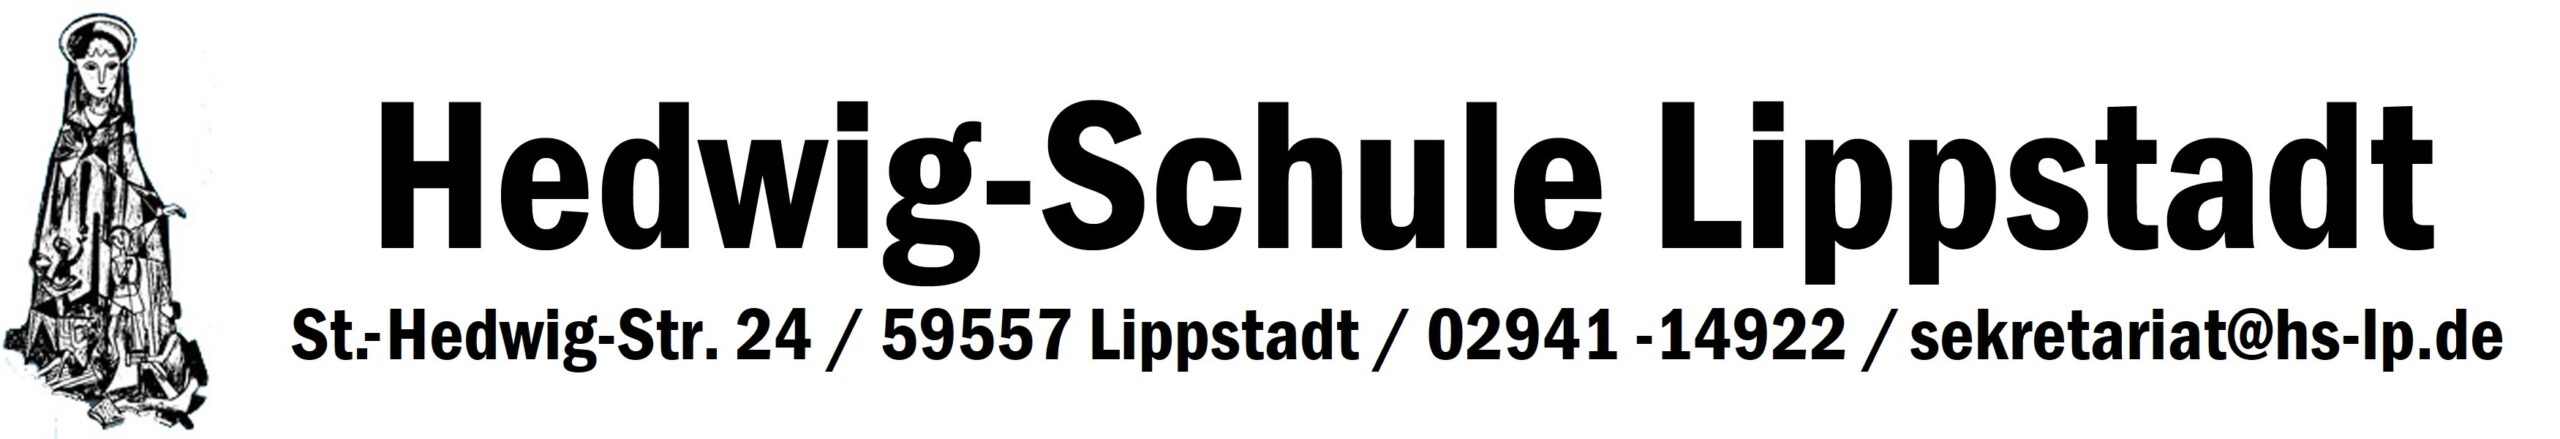 Hedwig-Schule Lippstadt Logo